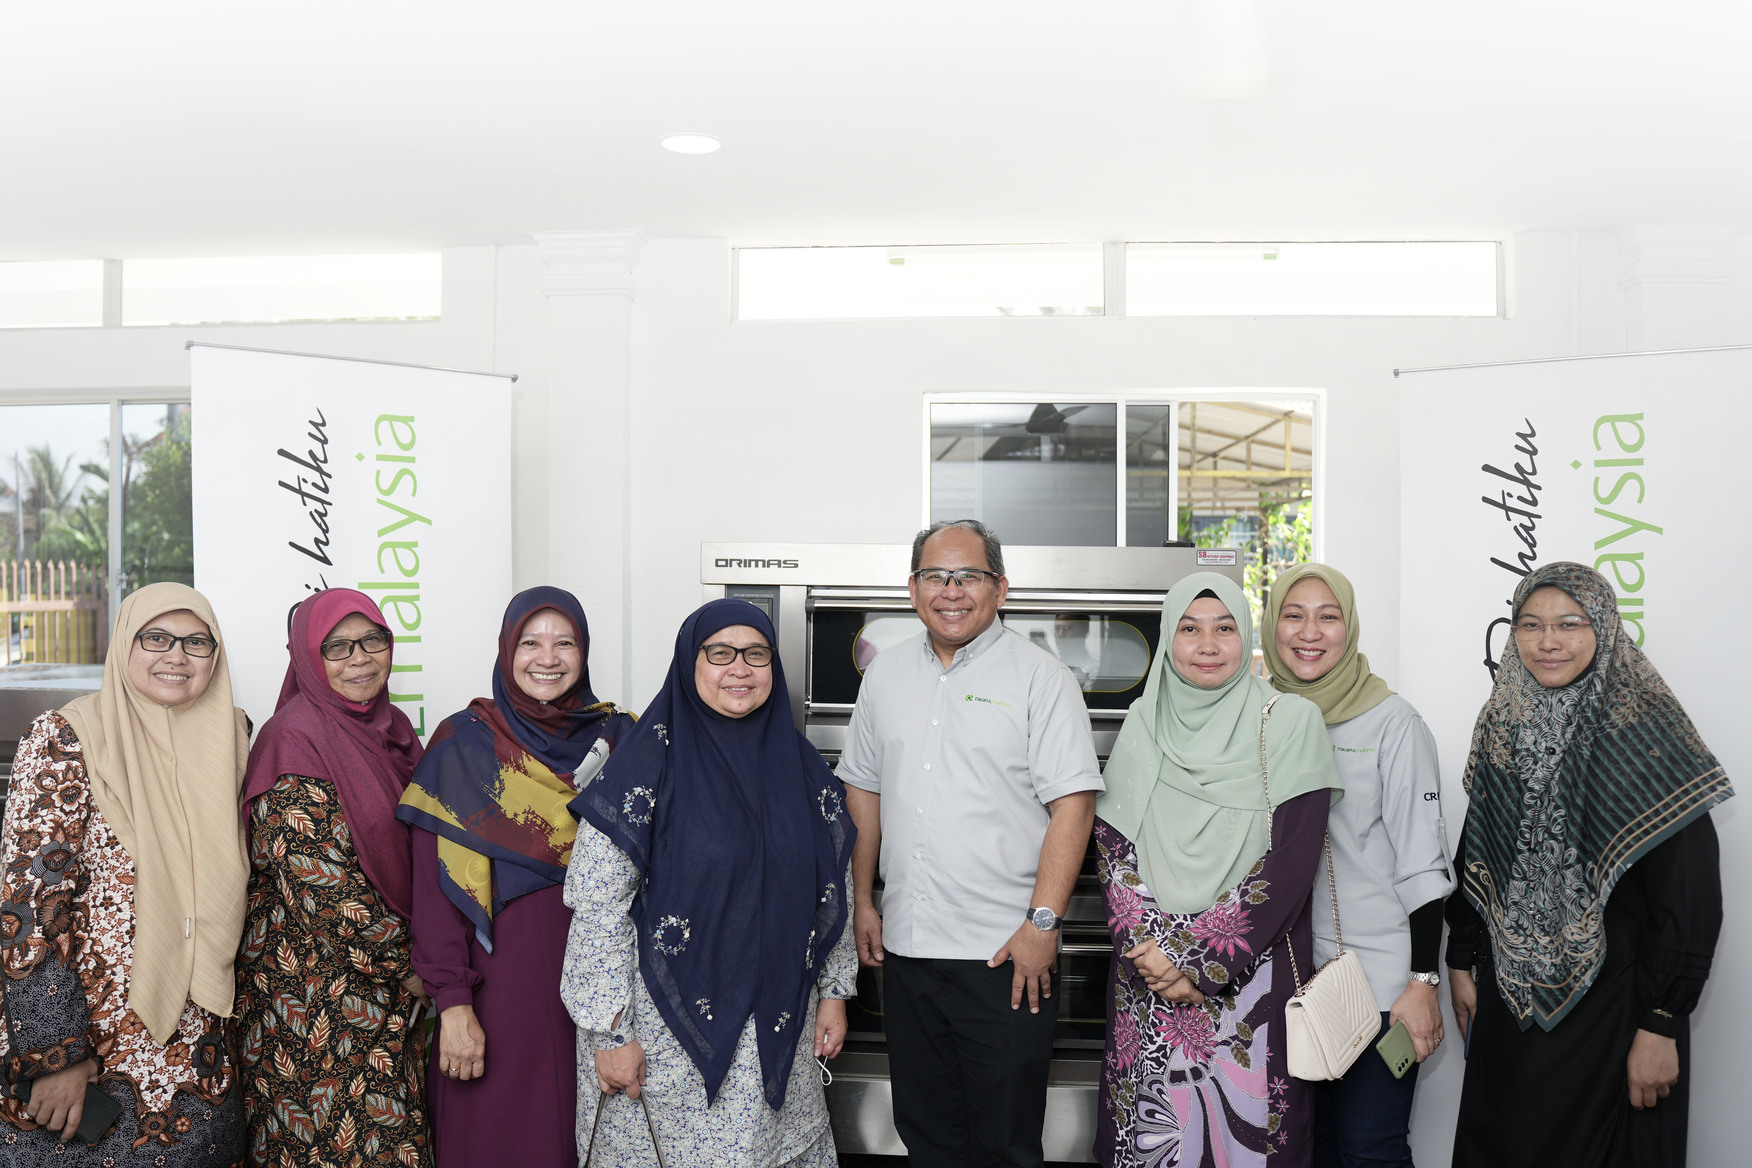 Takaful malaysia provides baking facilities for youth shelter | weirdkaya